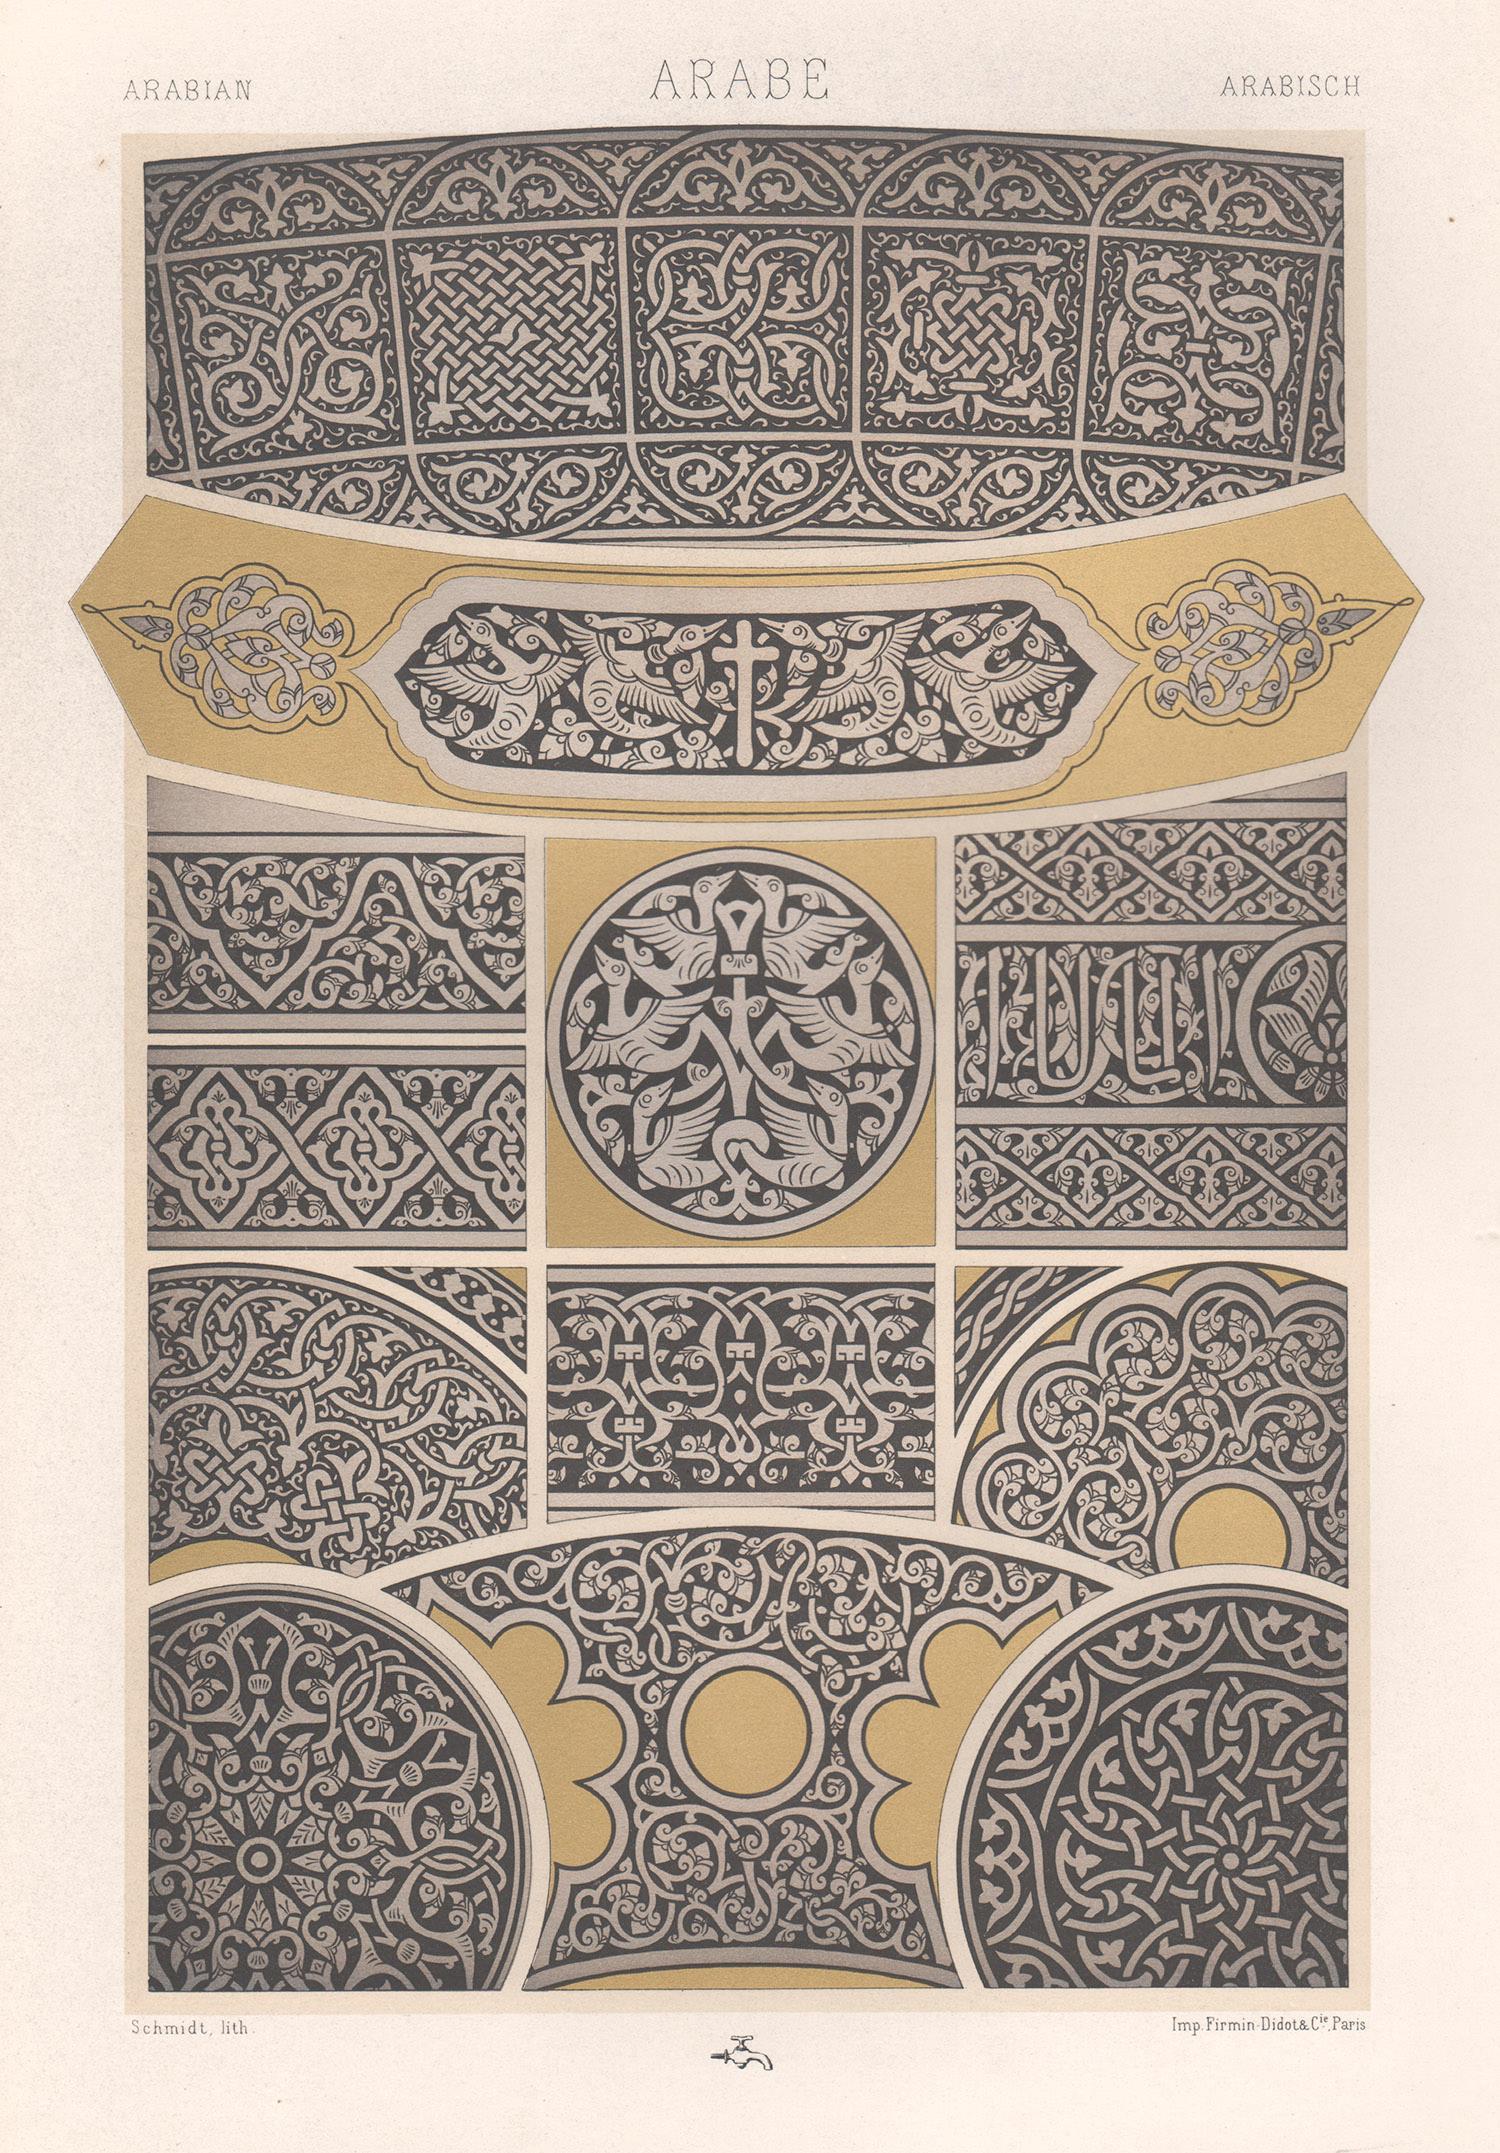 Albert-Charles-Auguste Racinet Abstract Print - Arabian, French antique 19th century Racinet art design lithograph print